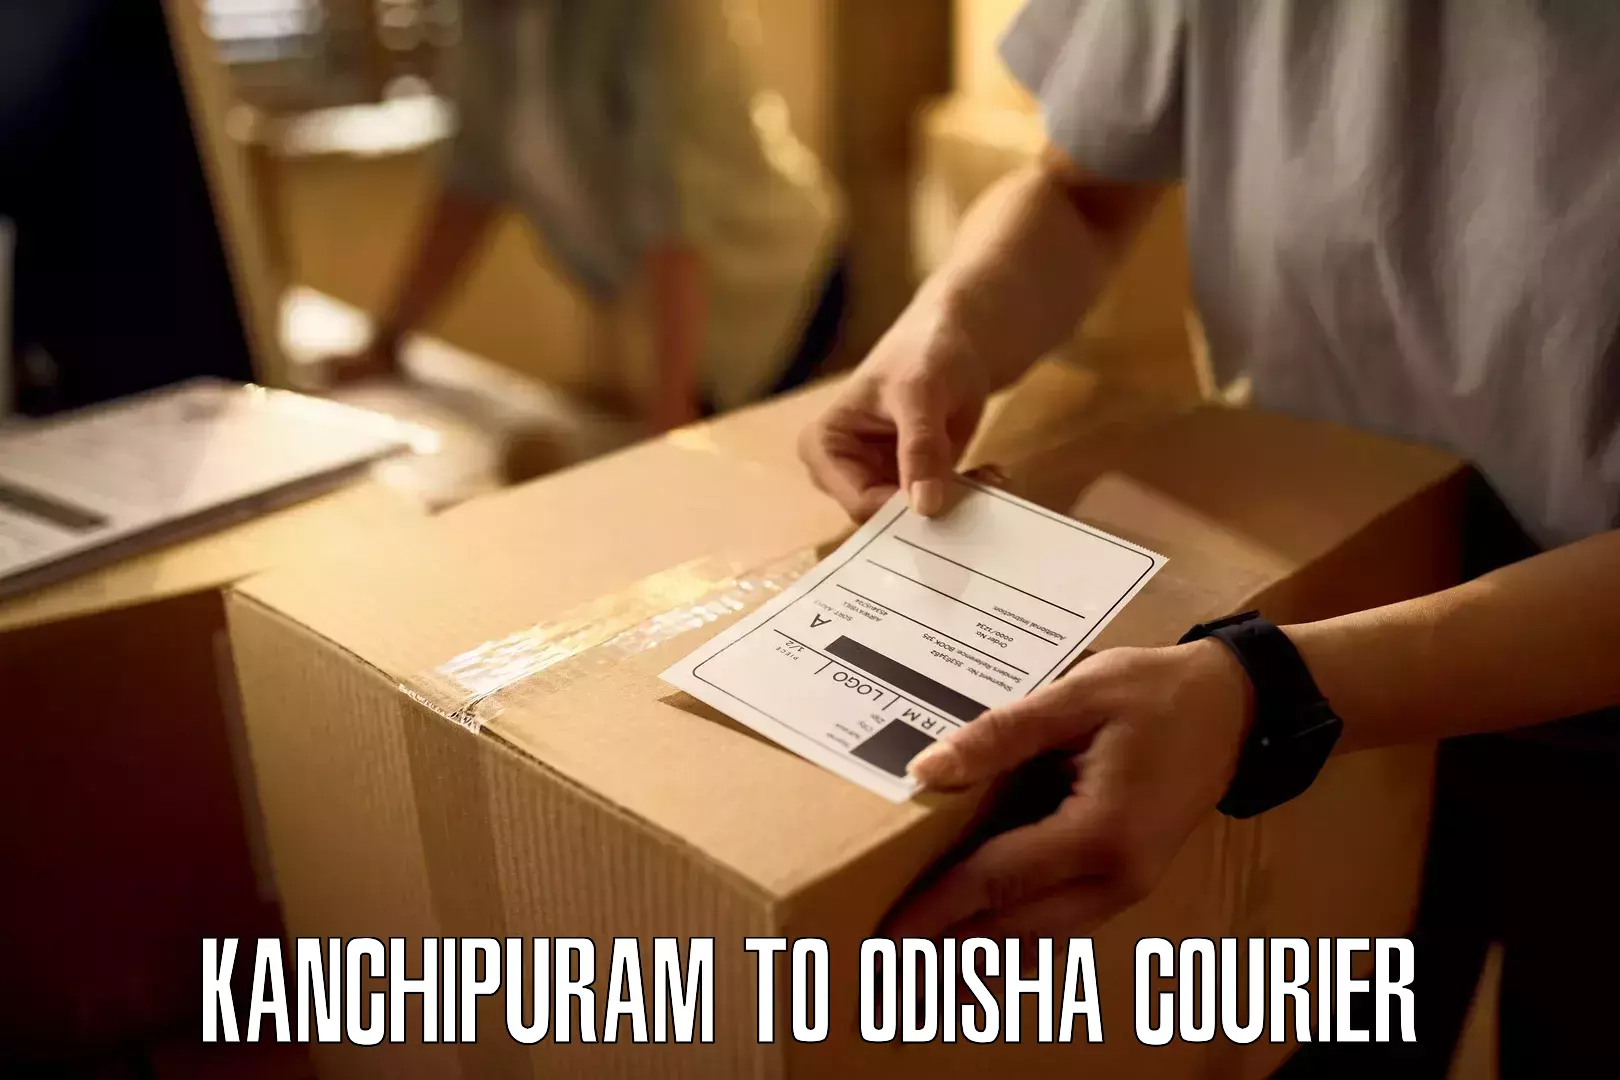 Courier service comparison Kanchipuram to Titilagarh